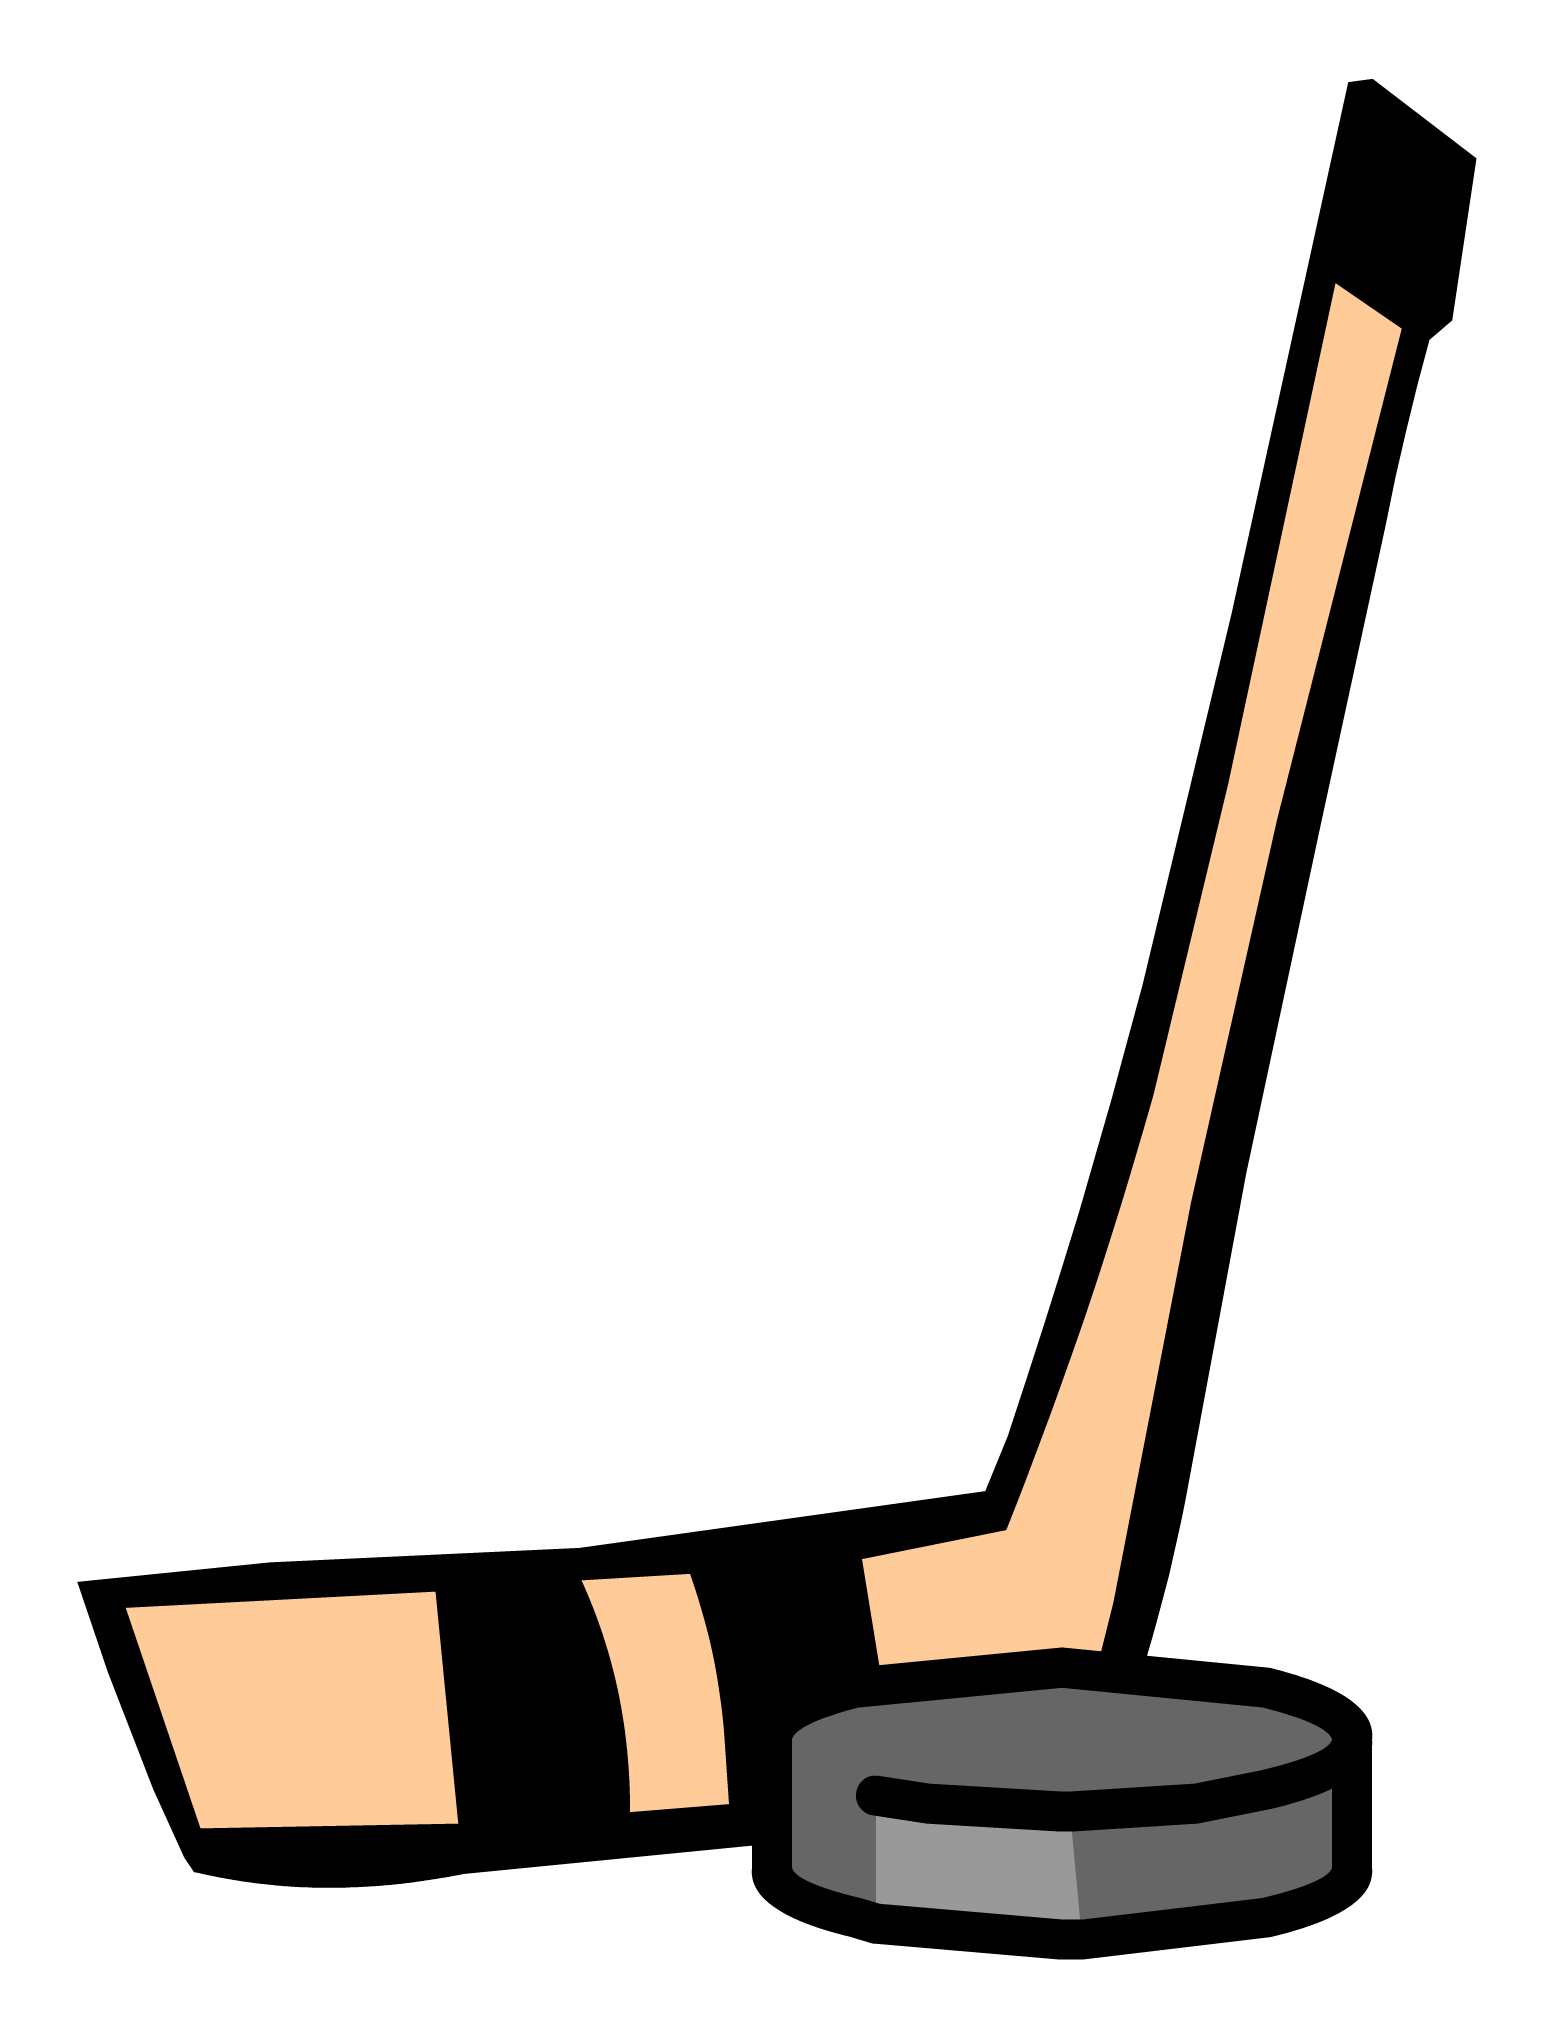 3, Hockey Stick - Hockey Stick And Puck Png (1556x2036)